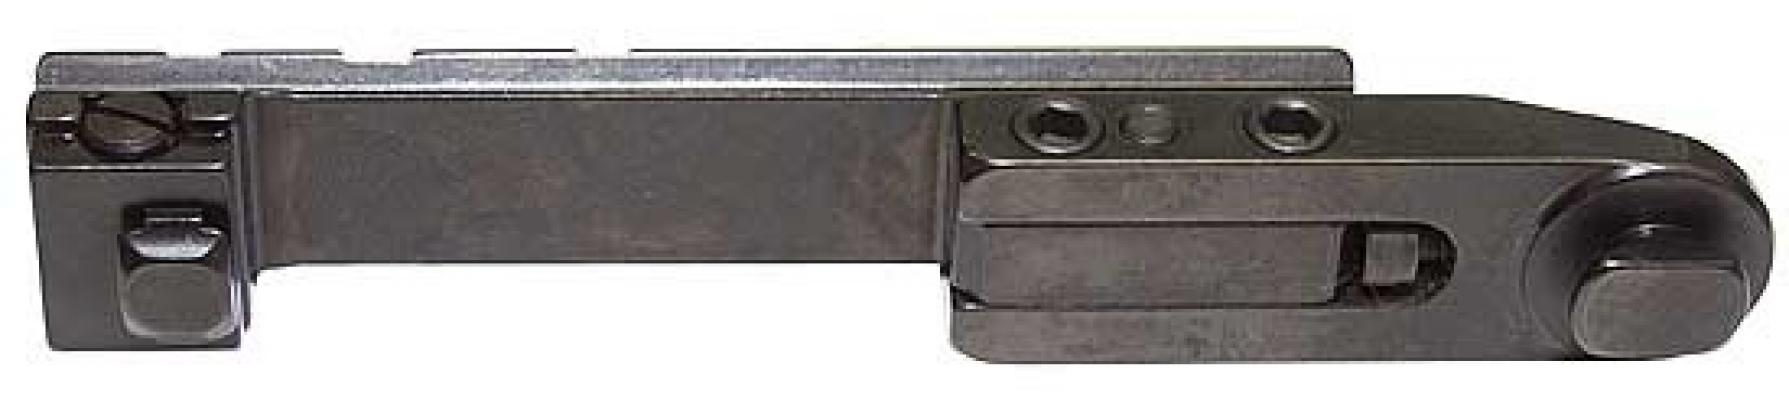 Поворотный монокронштейн Apel EAW с базой Weaver, Sauer 202 Magnum (без баз) фото 2